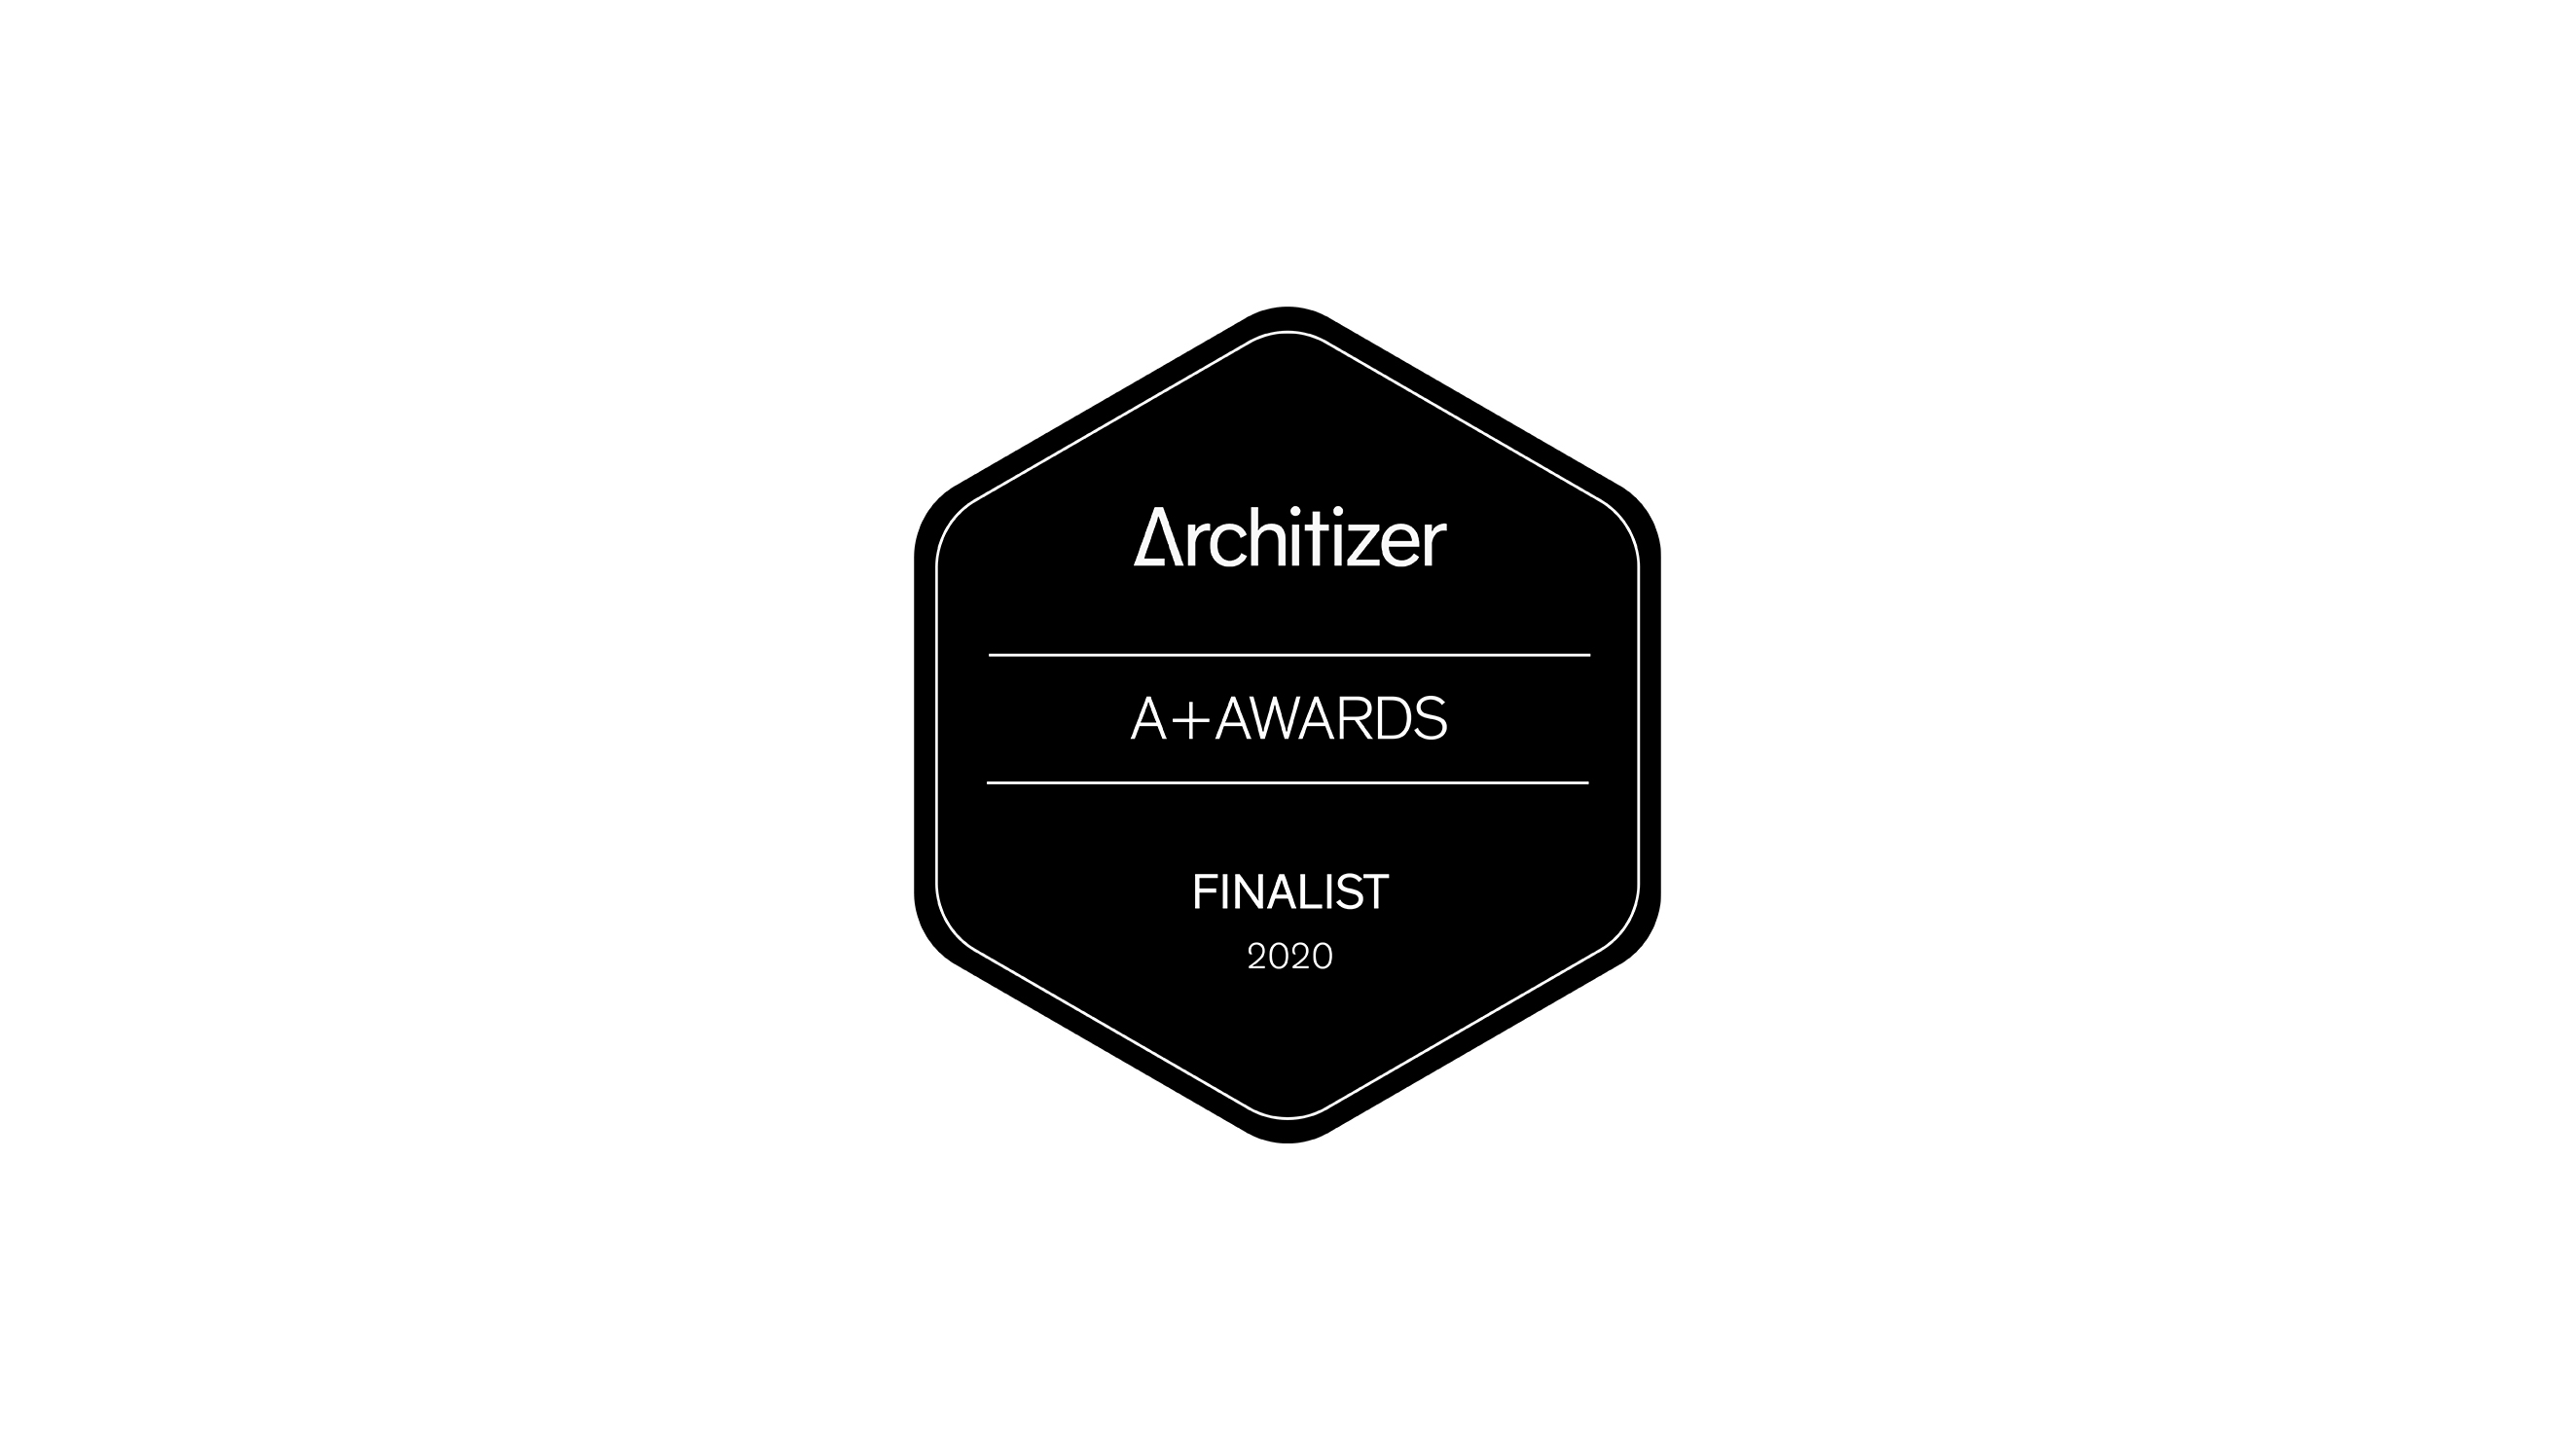 Finalista do Architizer Awards 2020 |2020 Architizer Awards Finalist